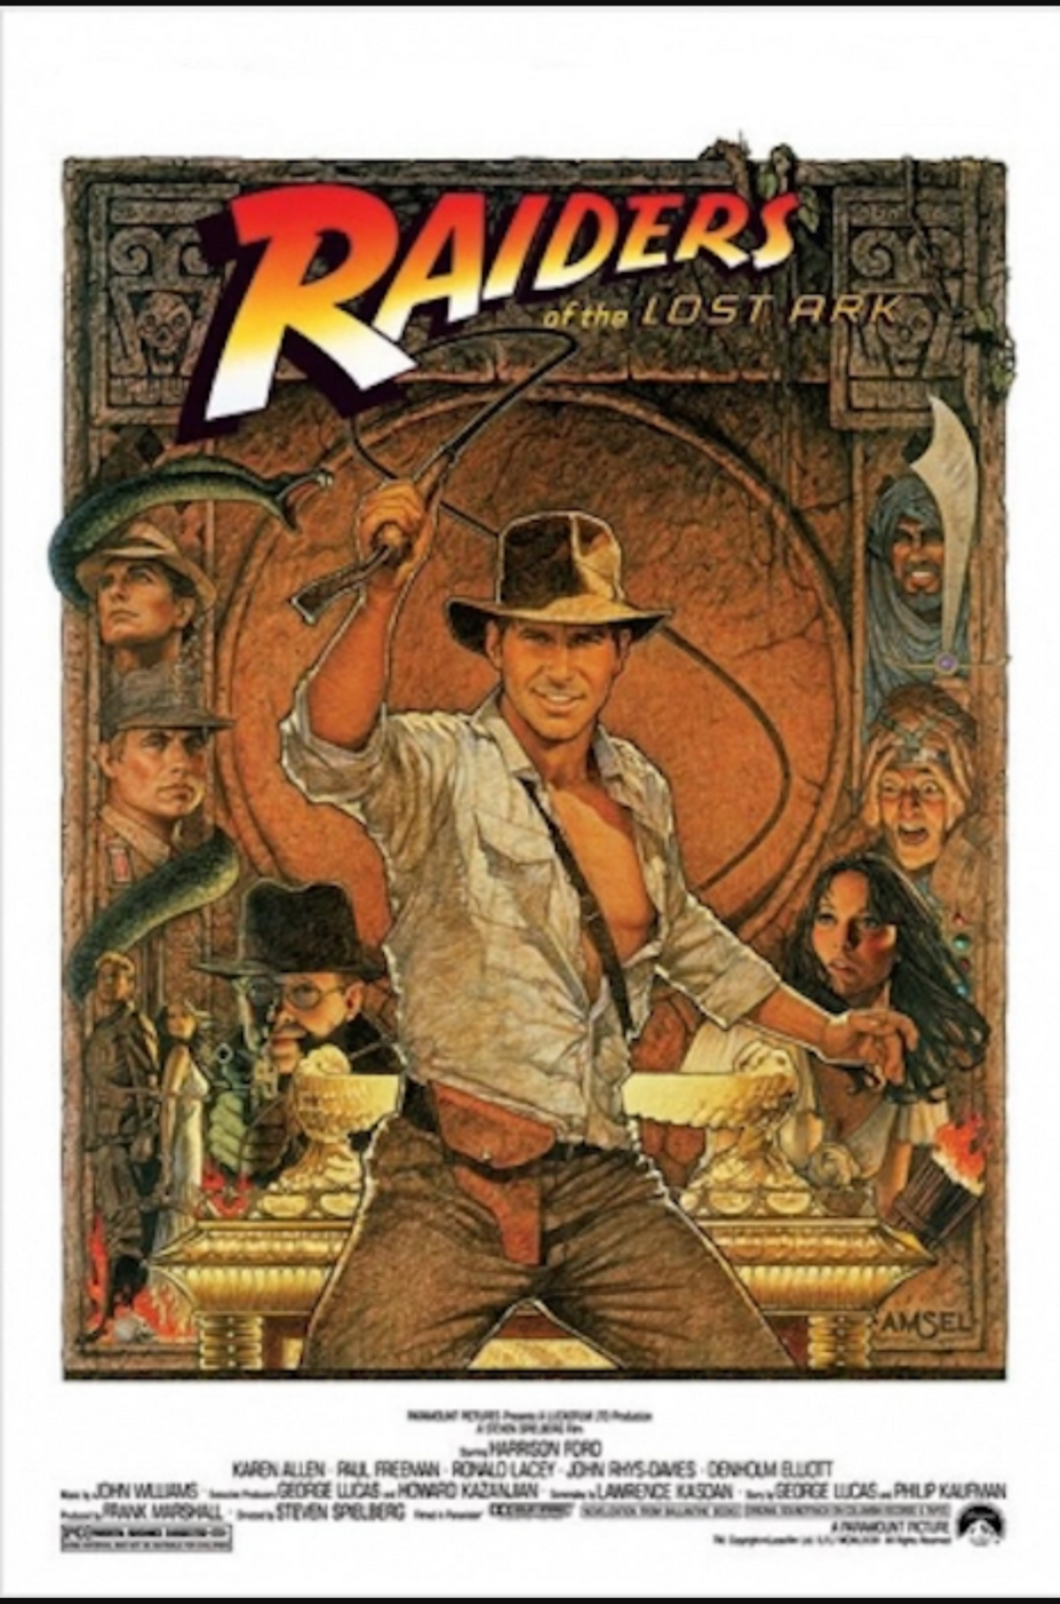 Indiana Jones - Raiders of the Lost Ark Poster - egoamo.co.za